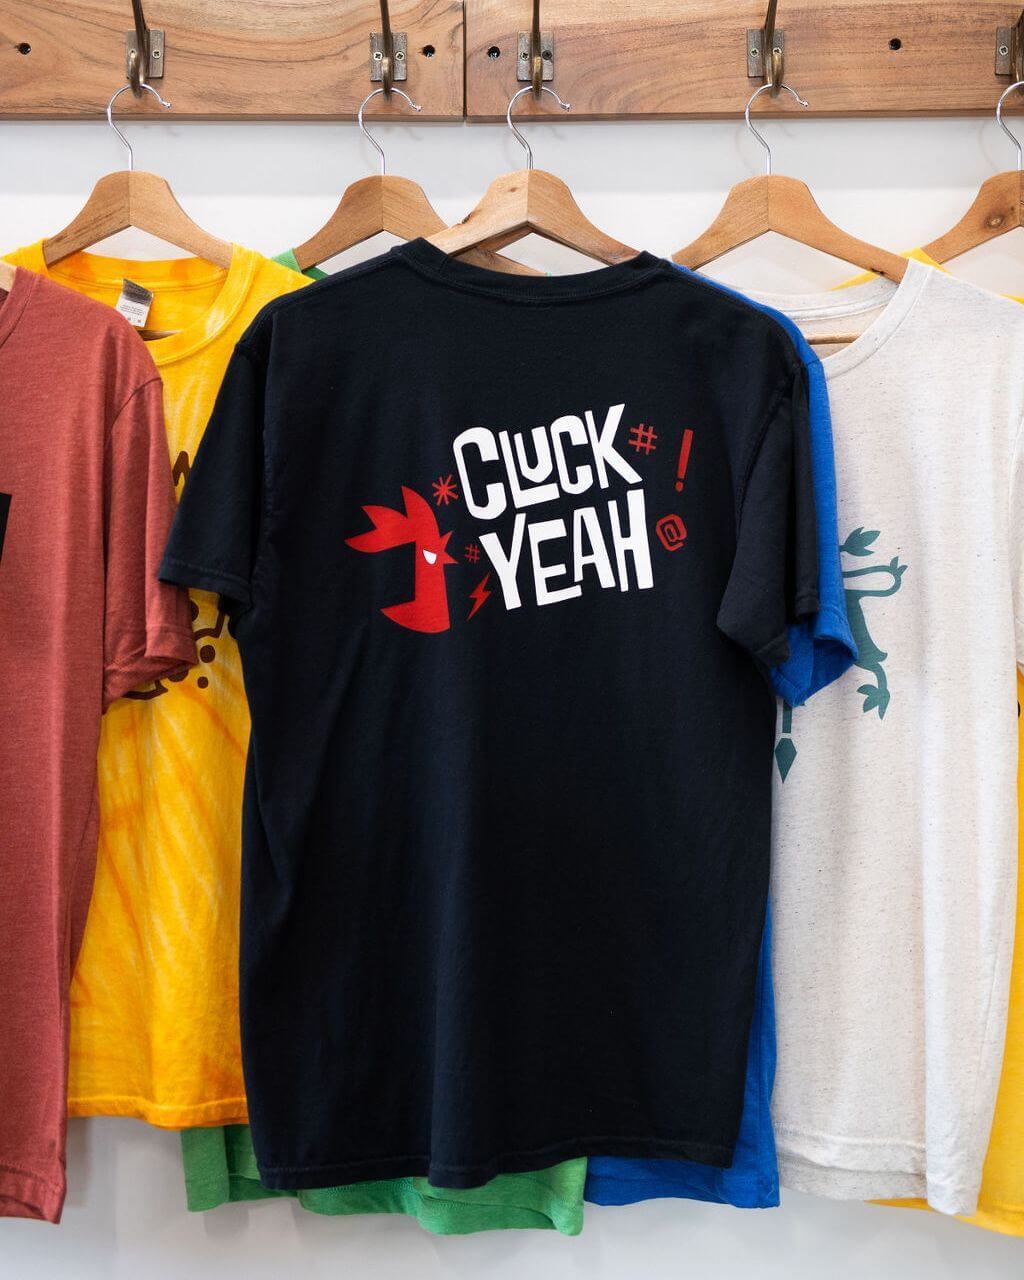 cluck yeah shirt